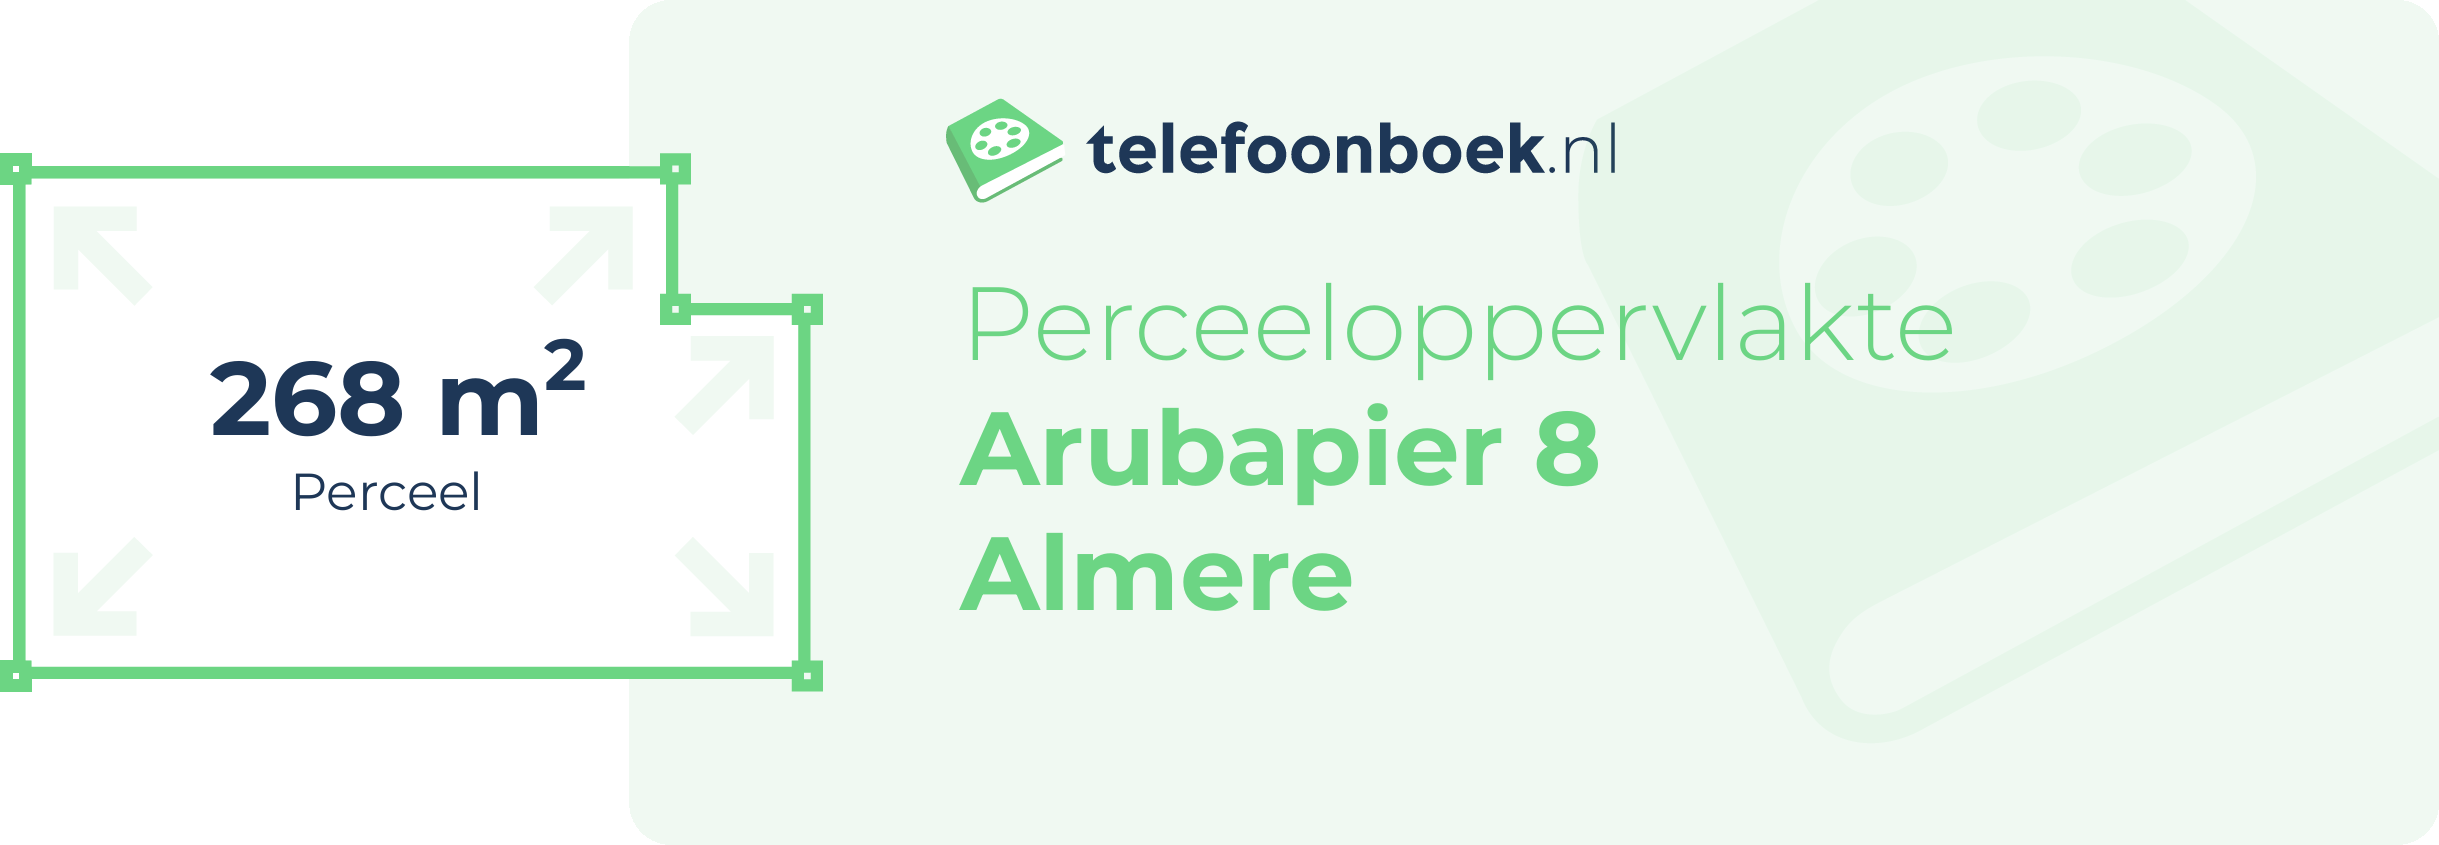 Perceeloppervlakte Arubapier 8 Almere